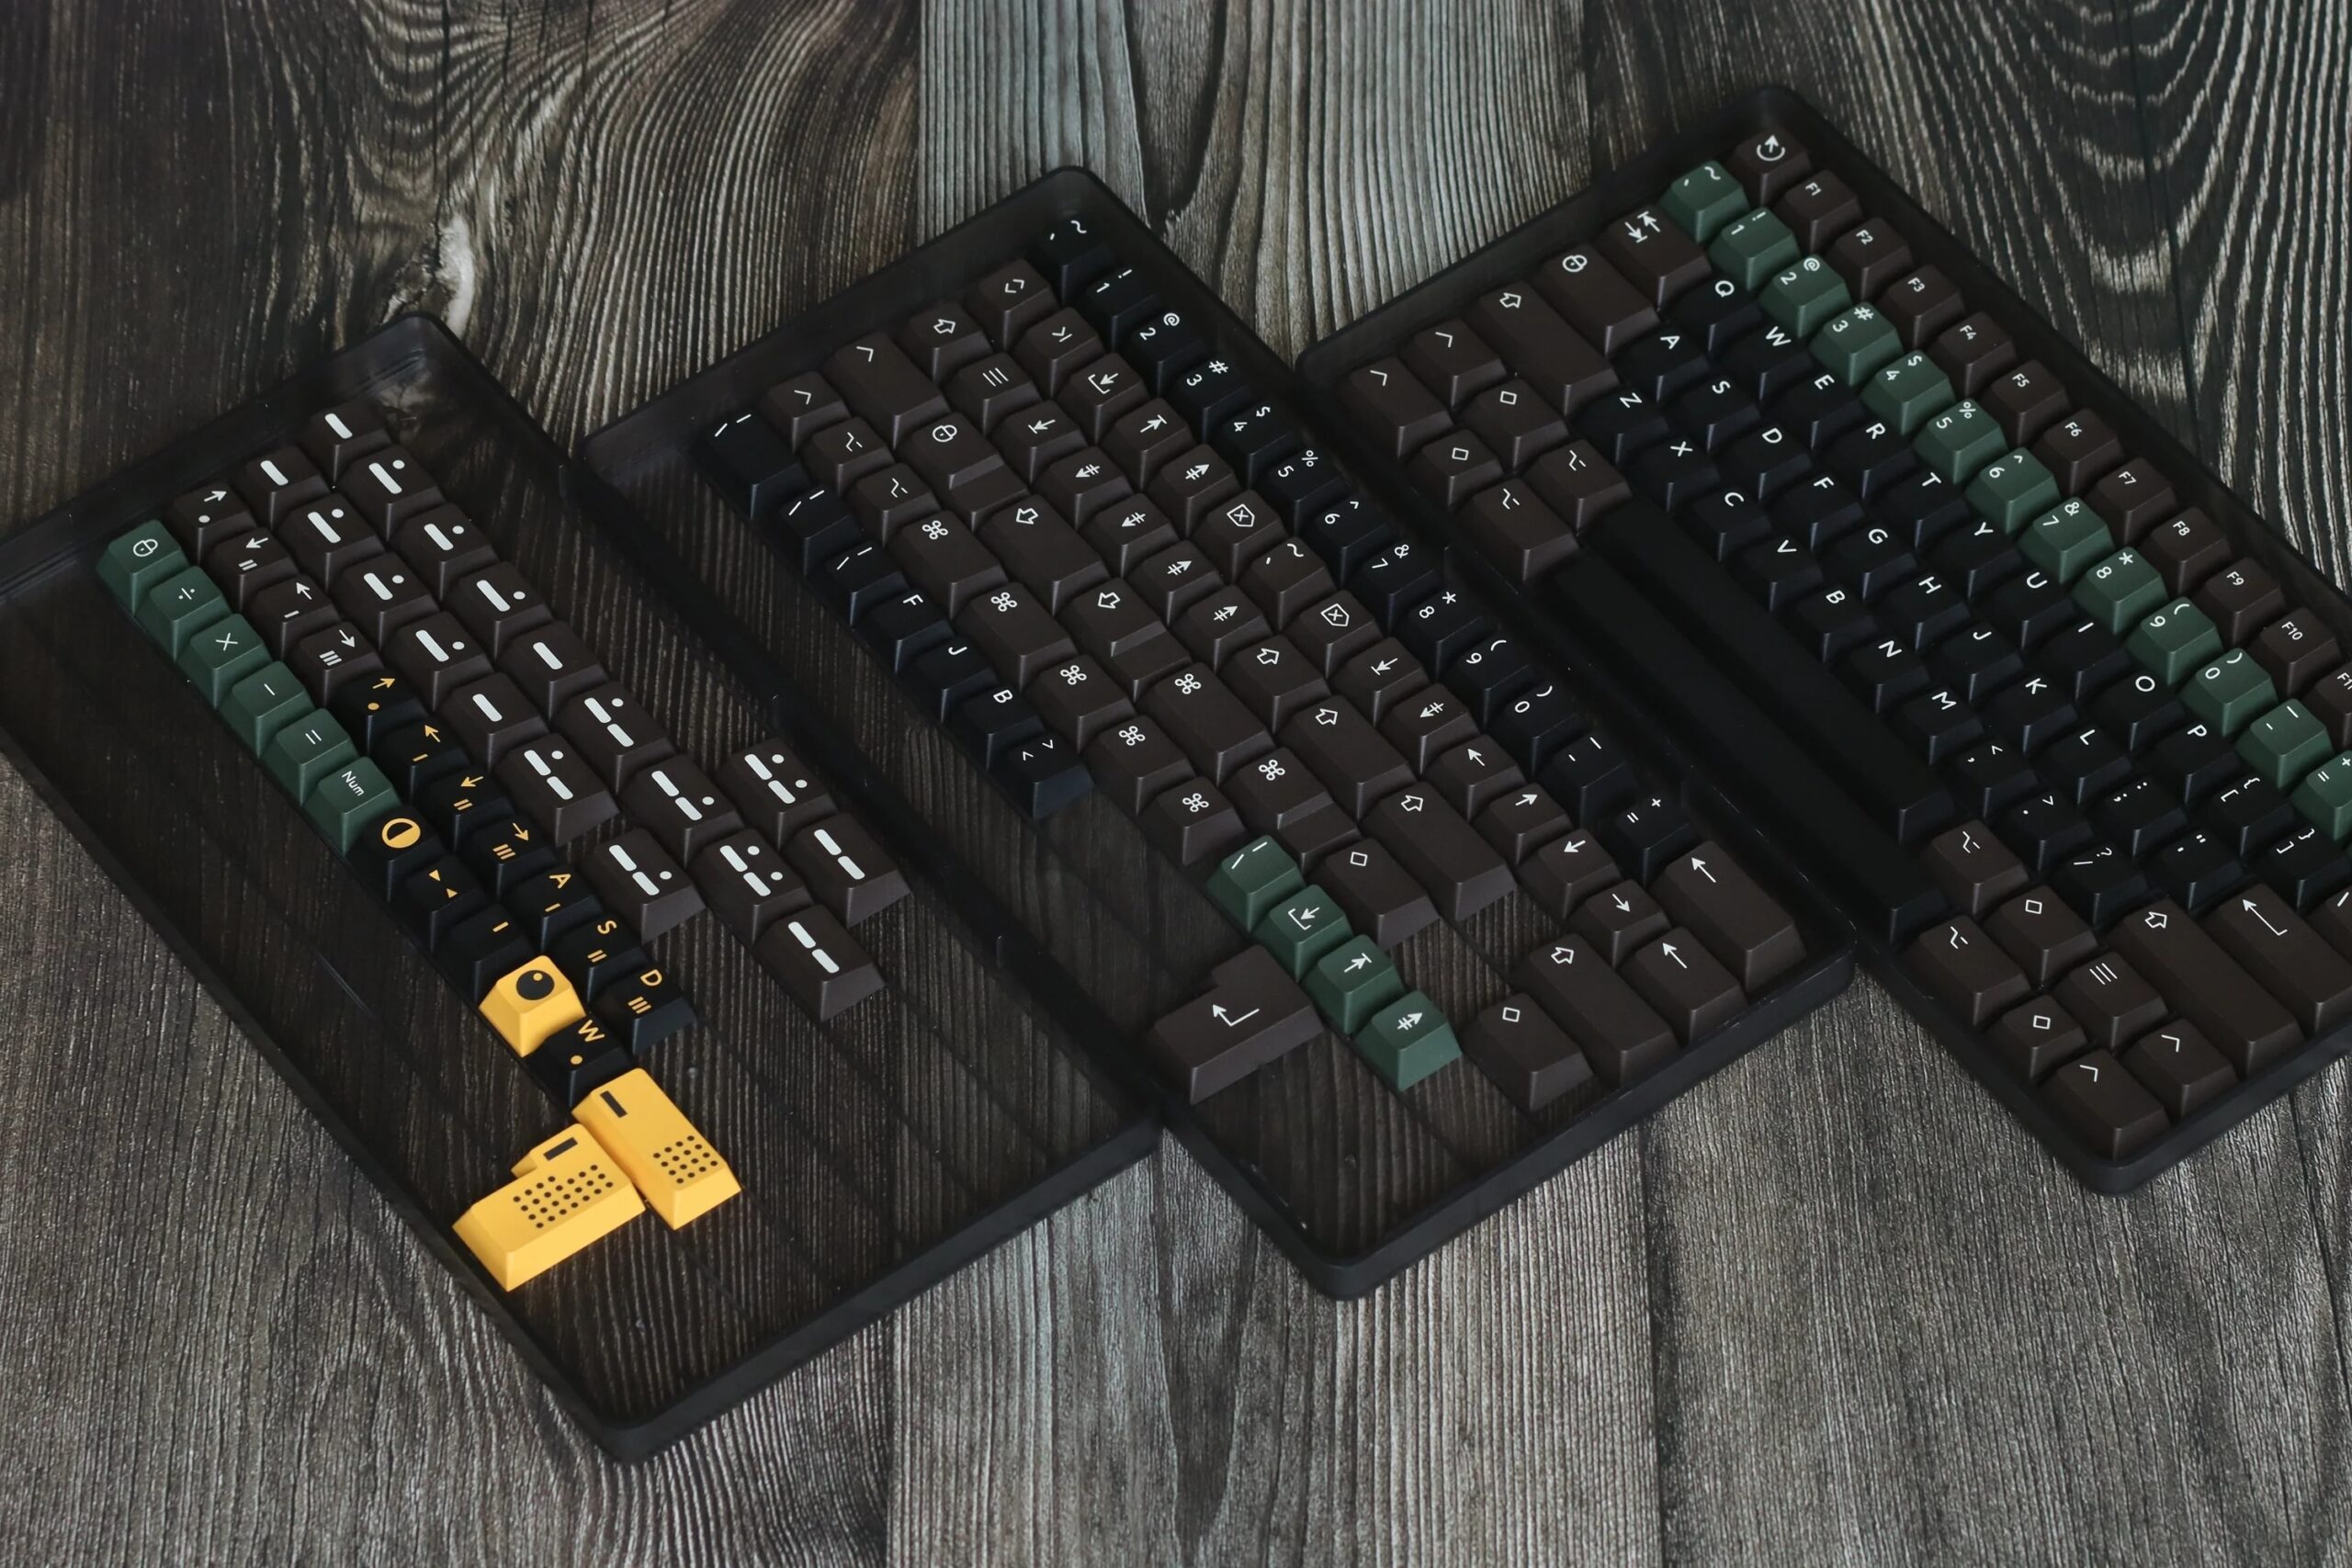 [Base Kit] PBTfans™ Resonance Keycaps PBT Doubleshot Cherry Profile For MX-style Mechanical Keyboard